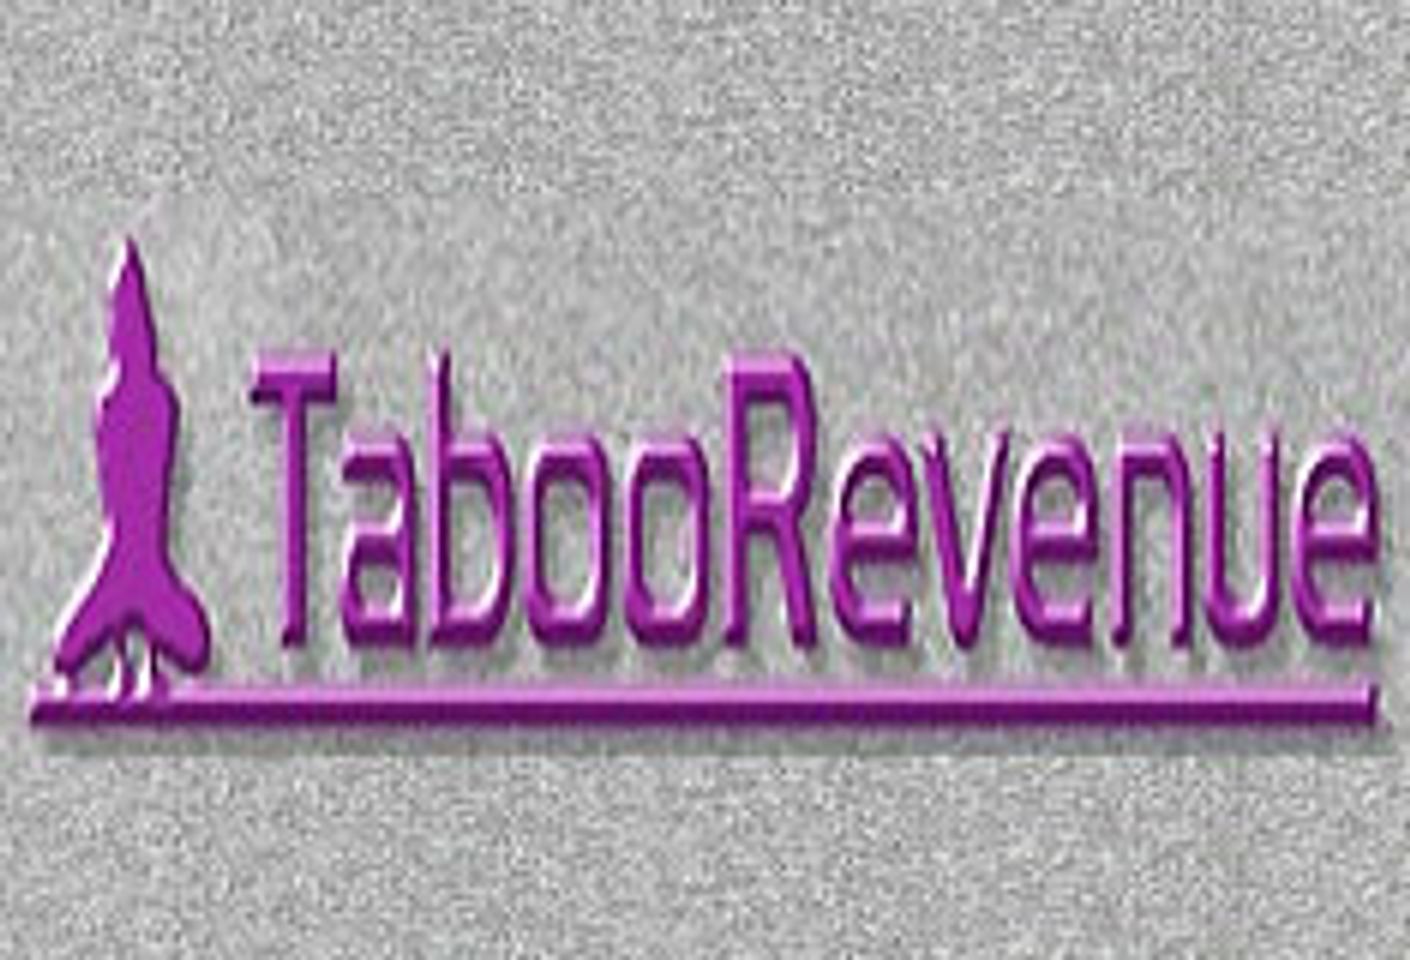 TabooRevenue.com Names Division Representatives